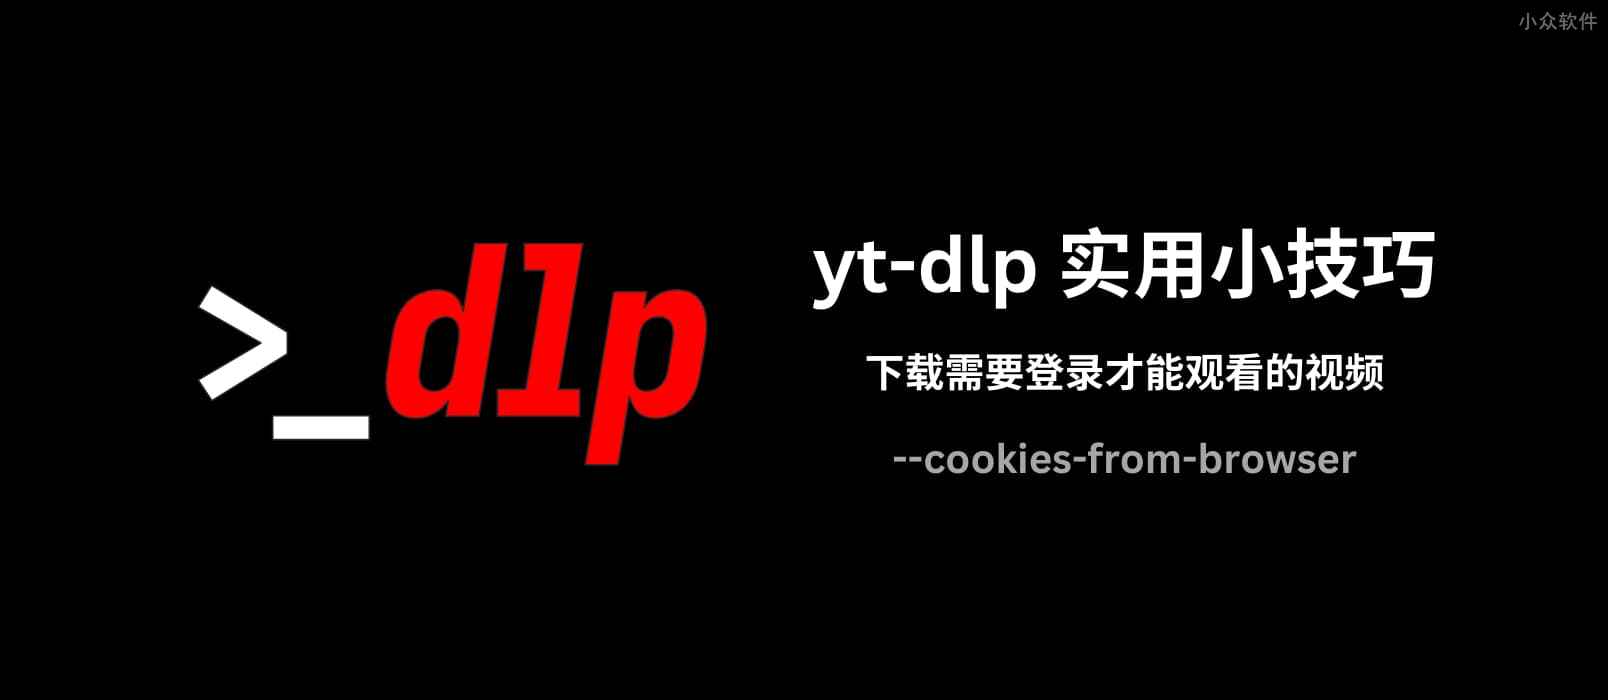 yt-dlp 实用小技巧：使用 cookies-from-browser 参数下载需要登录才能观看的视频